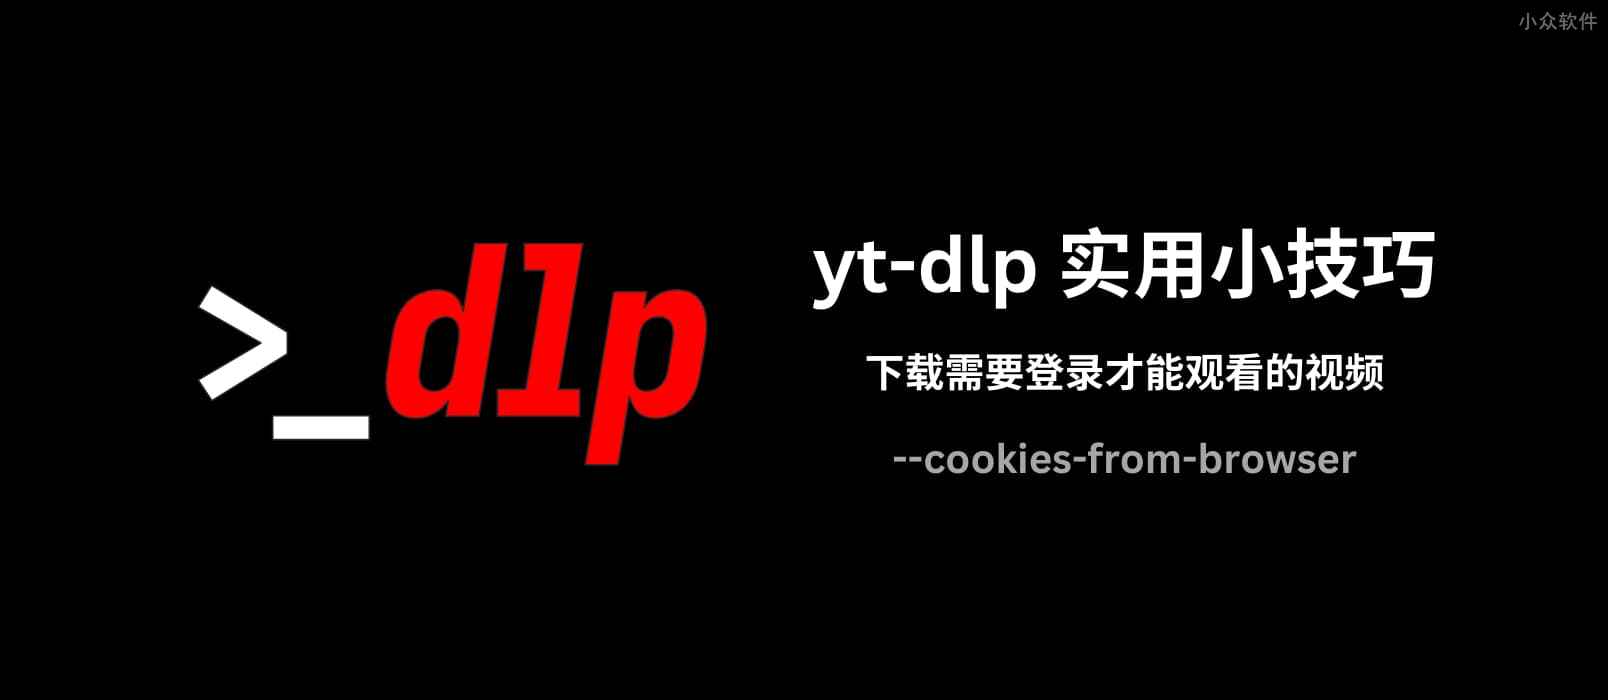 yt-dlp 实用小技巧：使用 cookies-from-browser 参数下载需要登录才能观看的视频